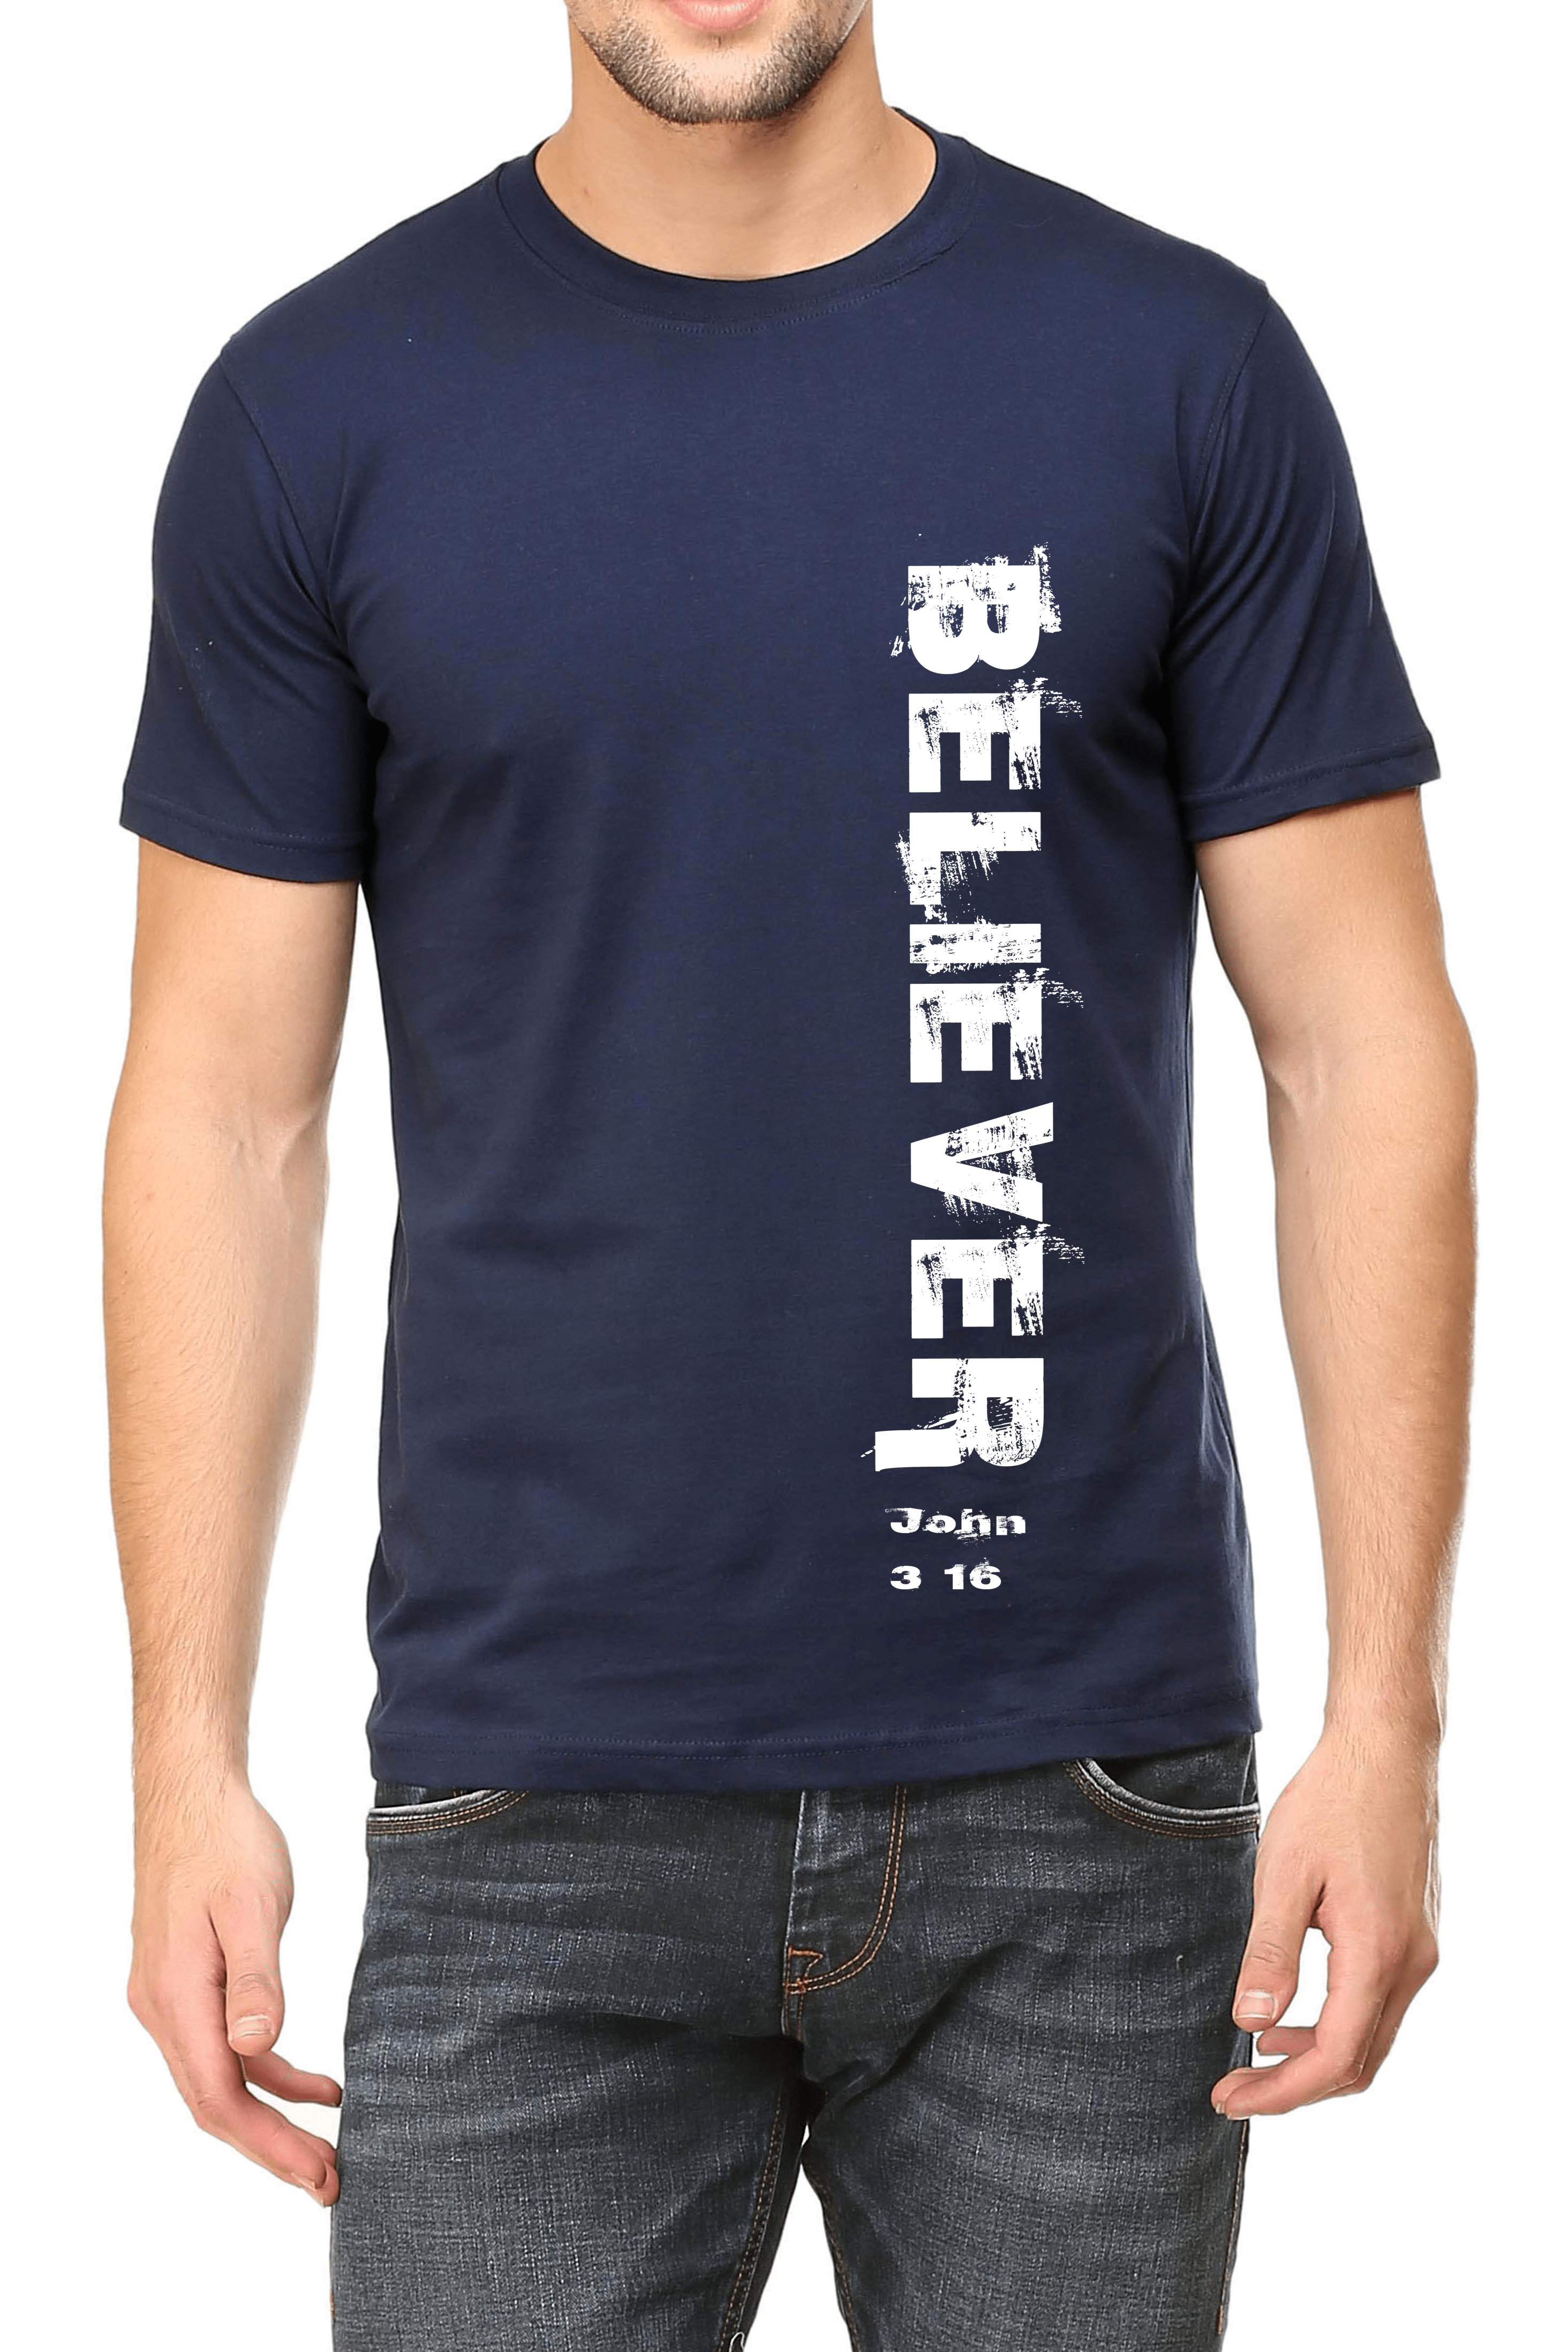 Living Words Men Round Neck T Shirt S / Navy Blue Believer - Christian T-Shirt